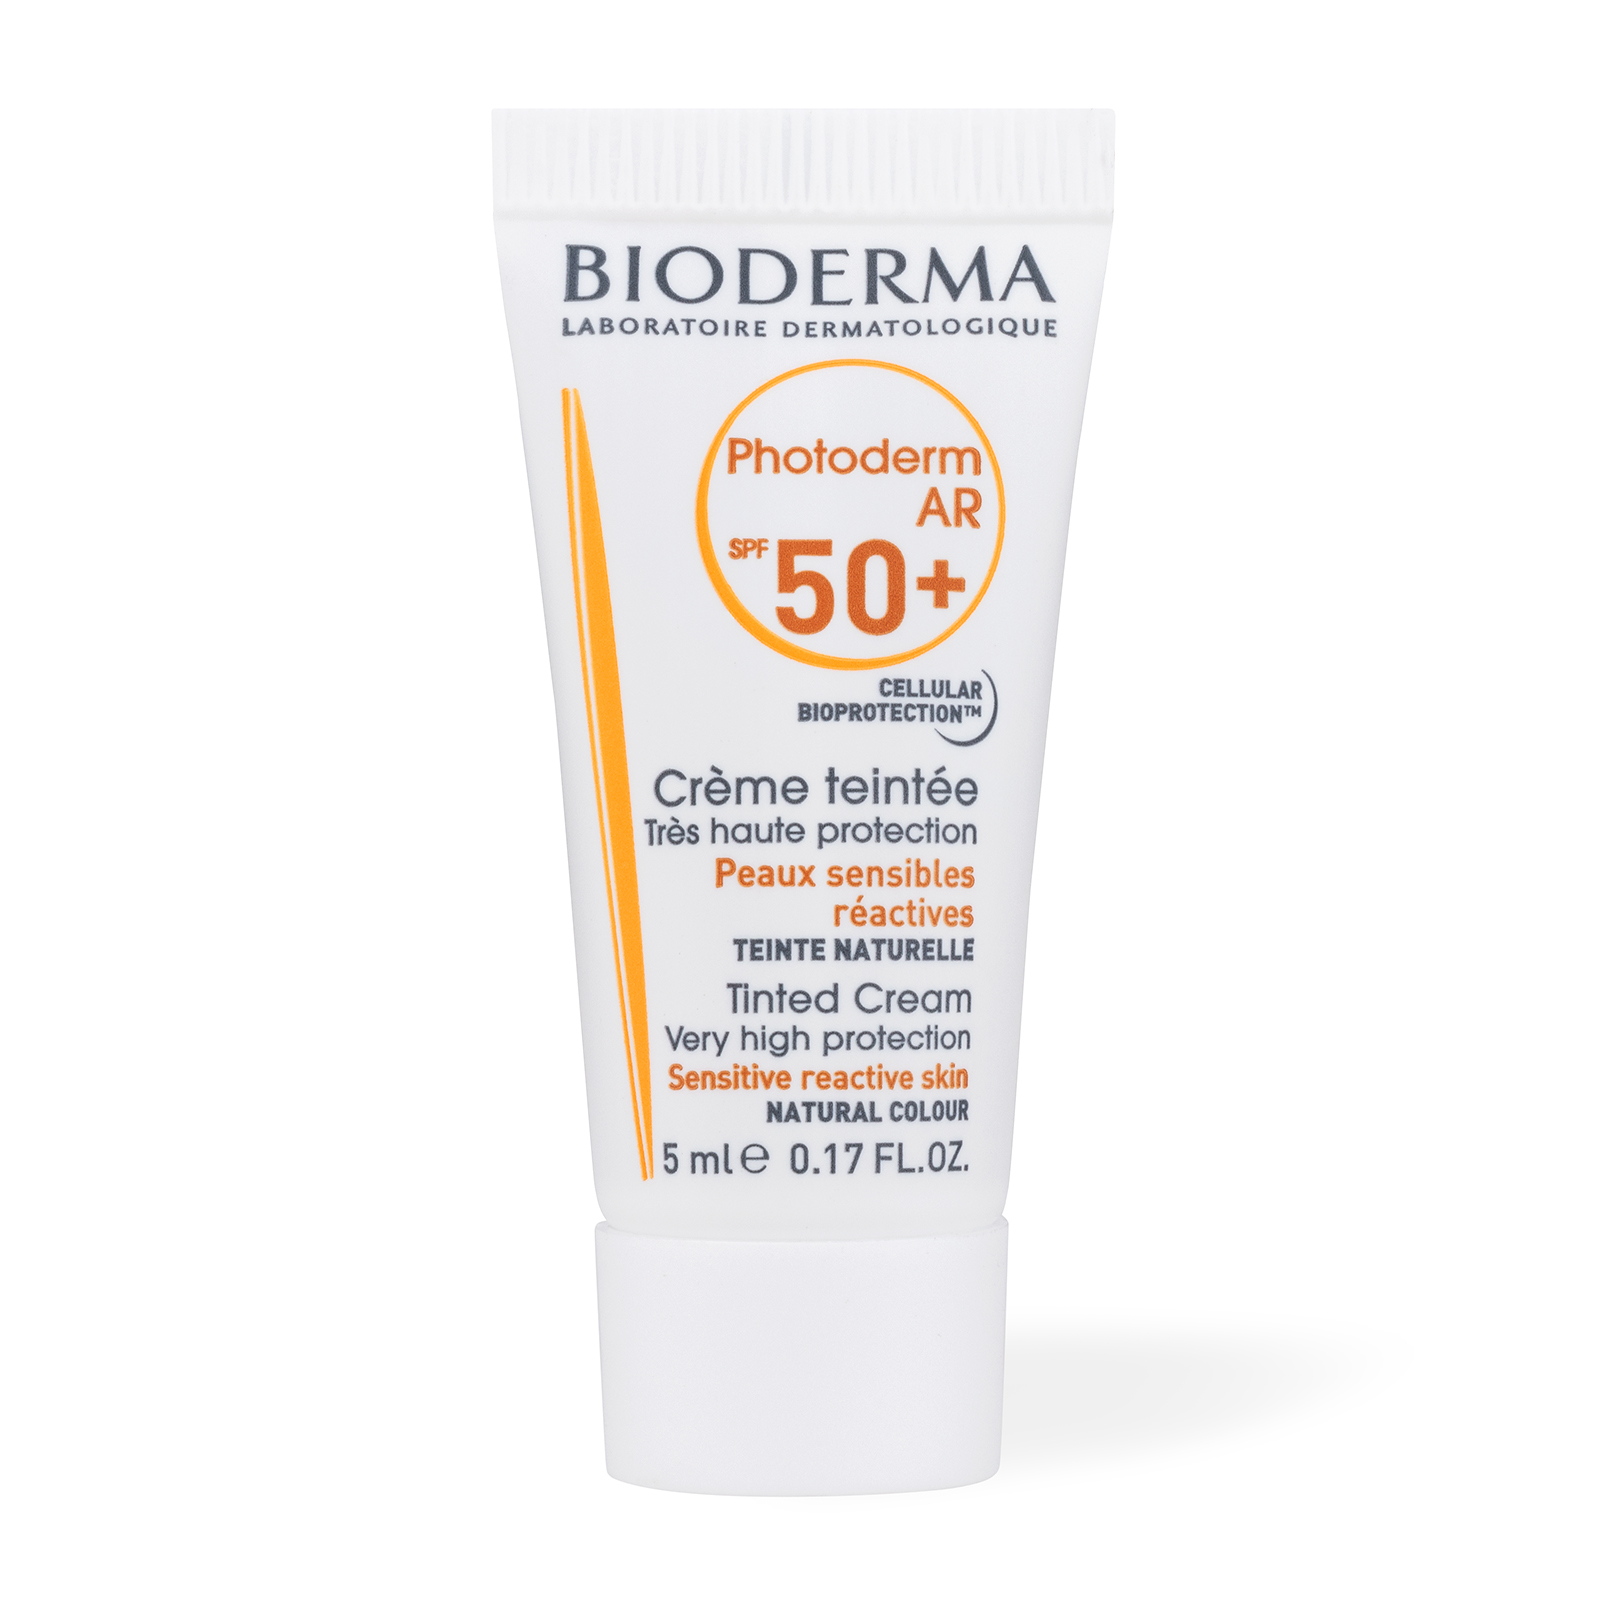 BIODERMA Photoderm AR Tinted Cream SPF 50+ 5ml - HK